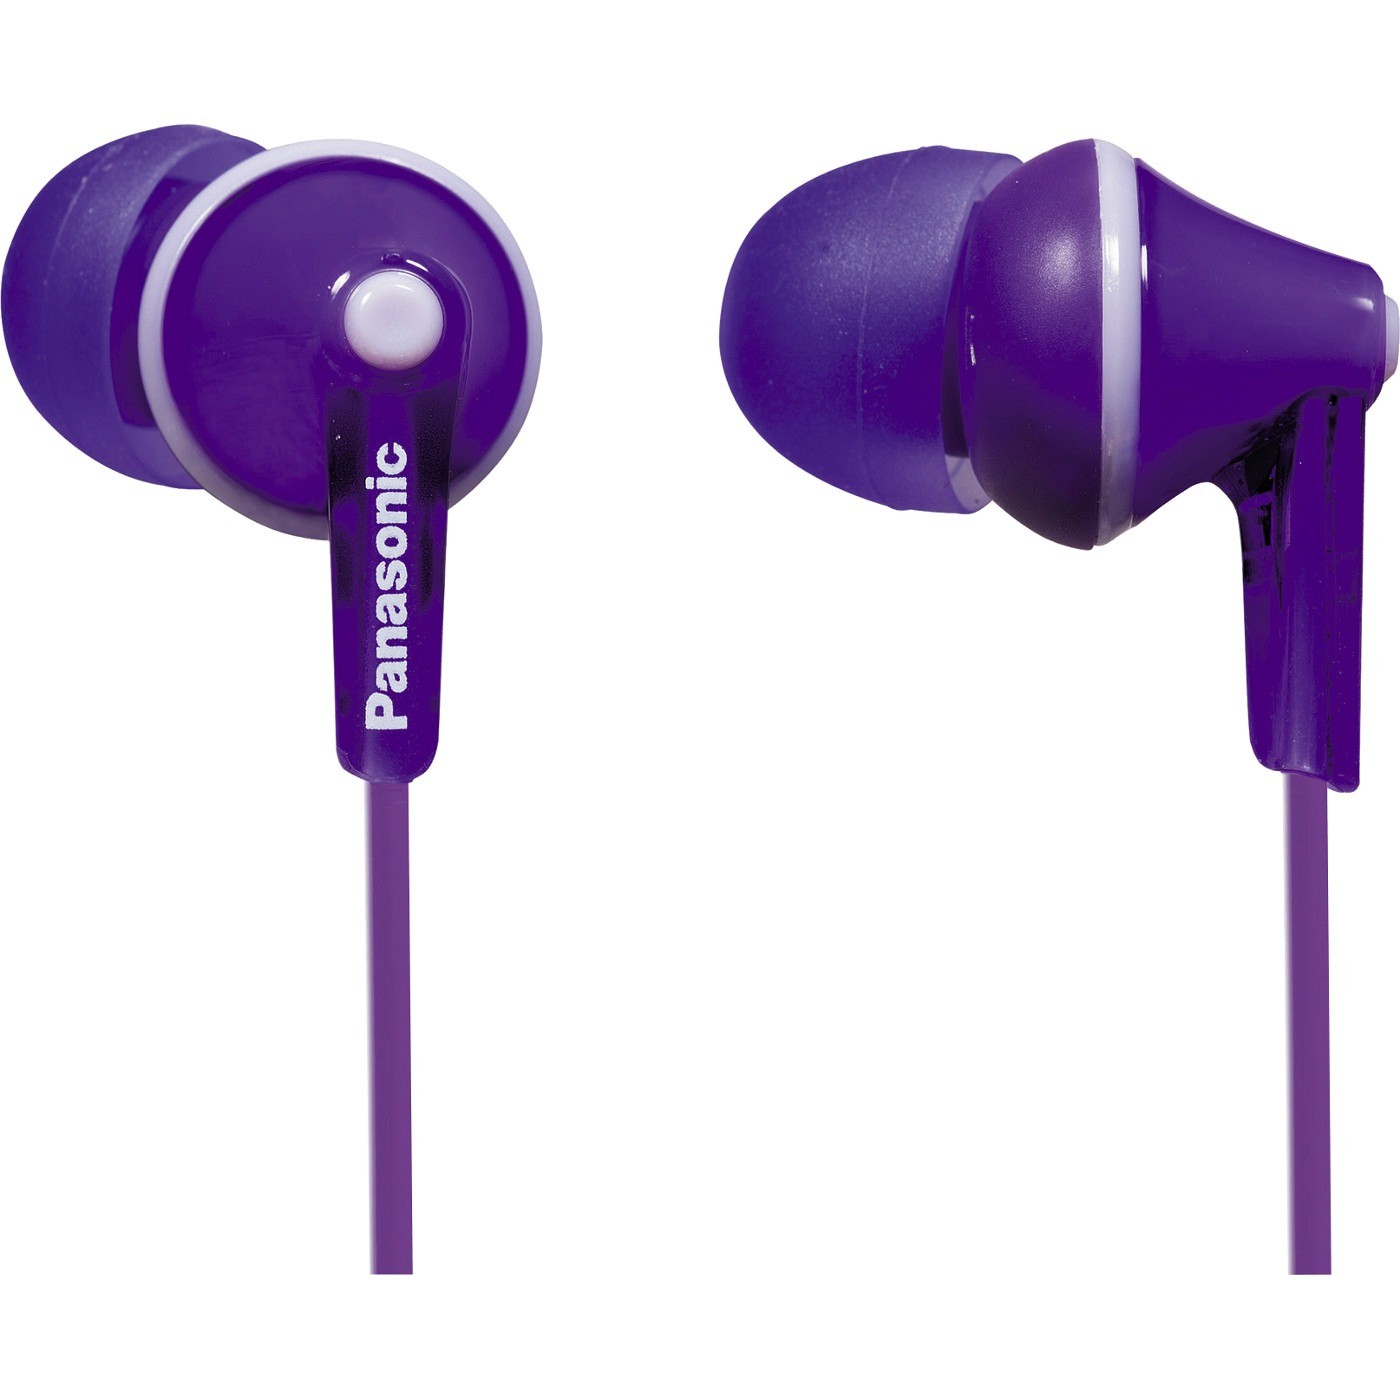 PANASONIC CONS ELECT-COMM UNIT RP-HJE125-V Panasonic  Hje125 Ergofit In-Ear Earbuds (Violet)